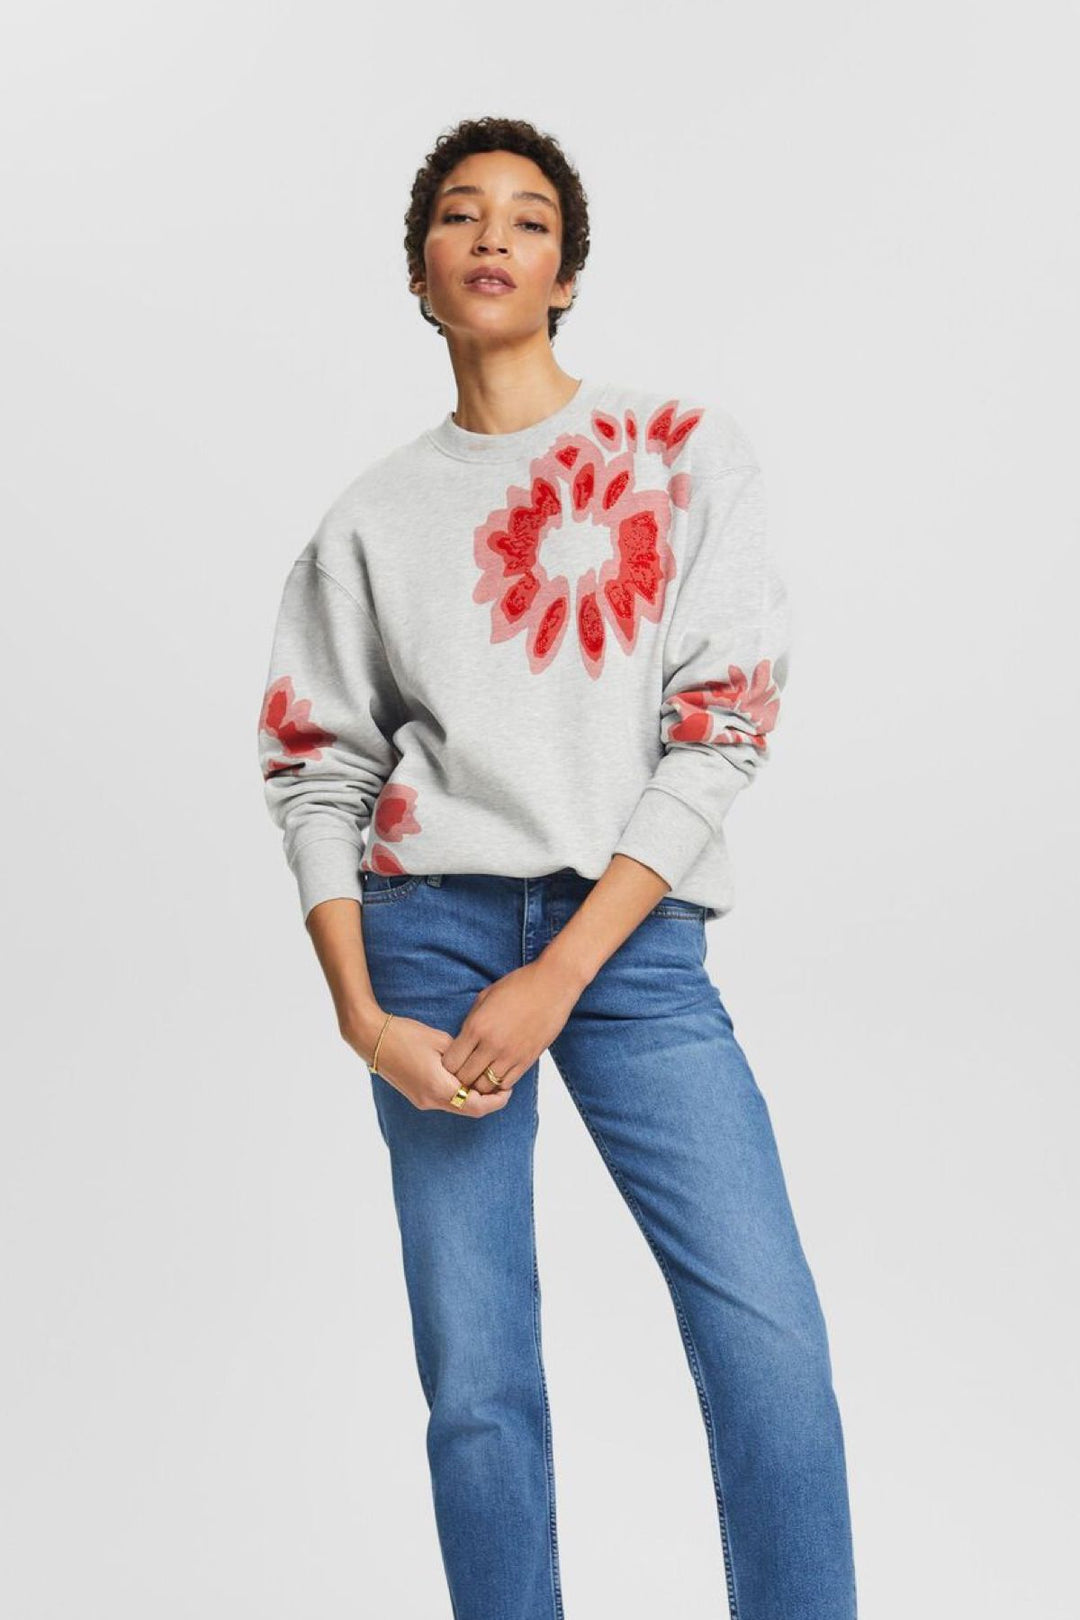 Sweatshirt with flowers